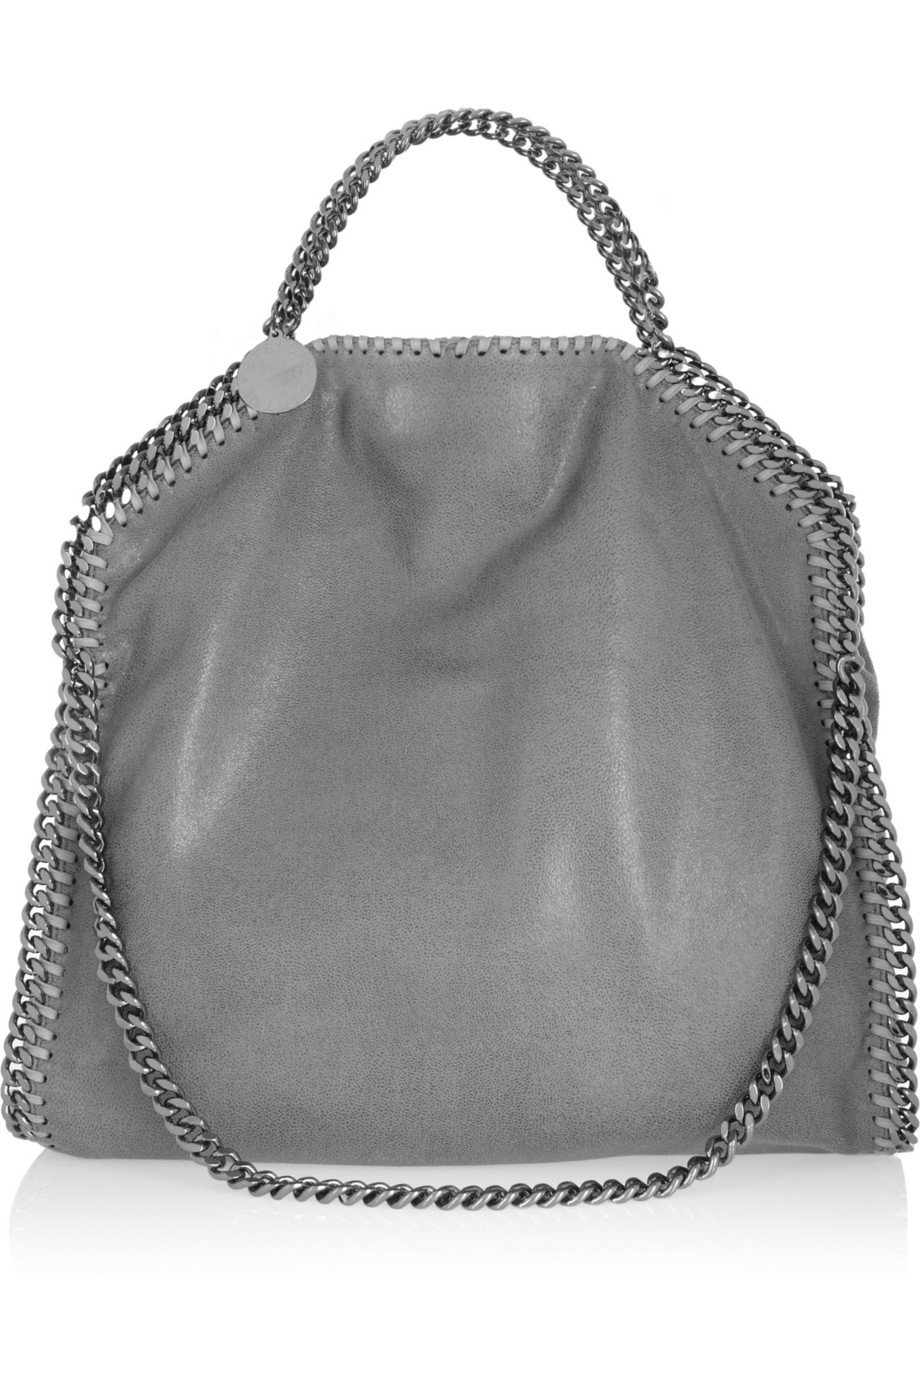 Stella Mccartney Falabella Handbags And Purses Made